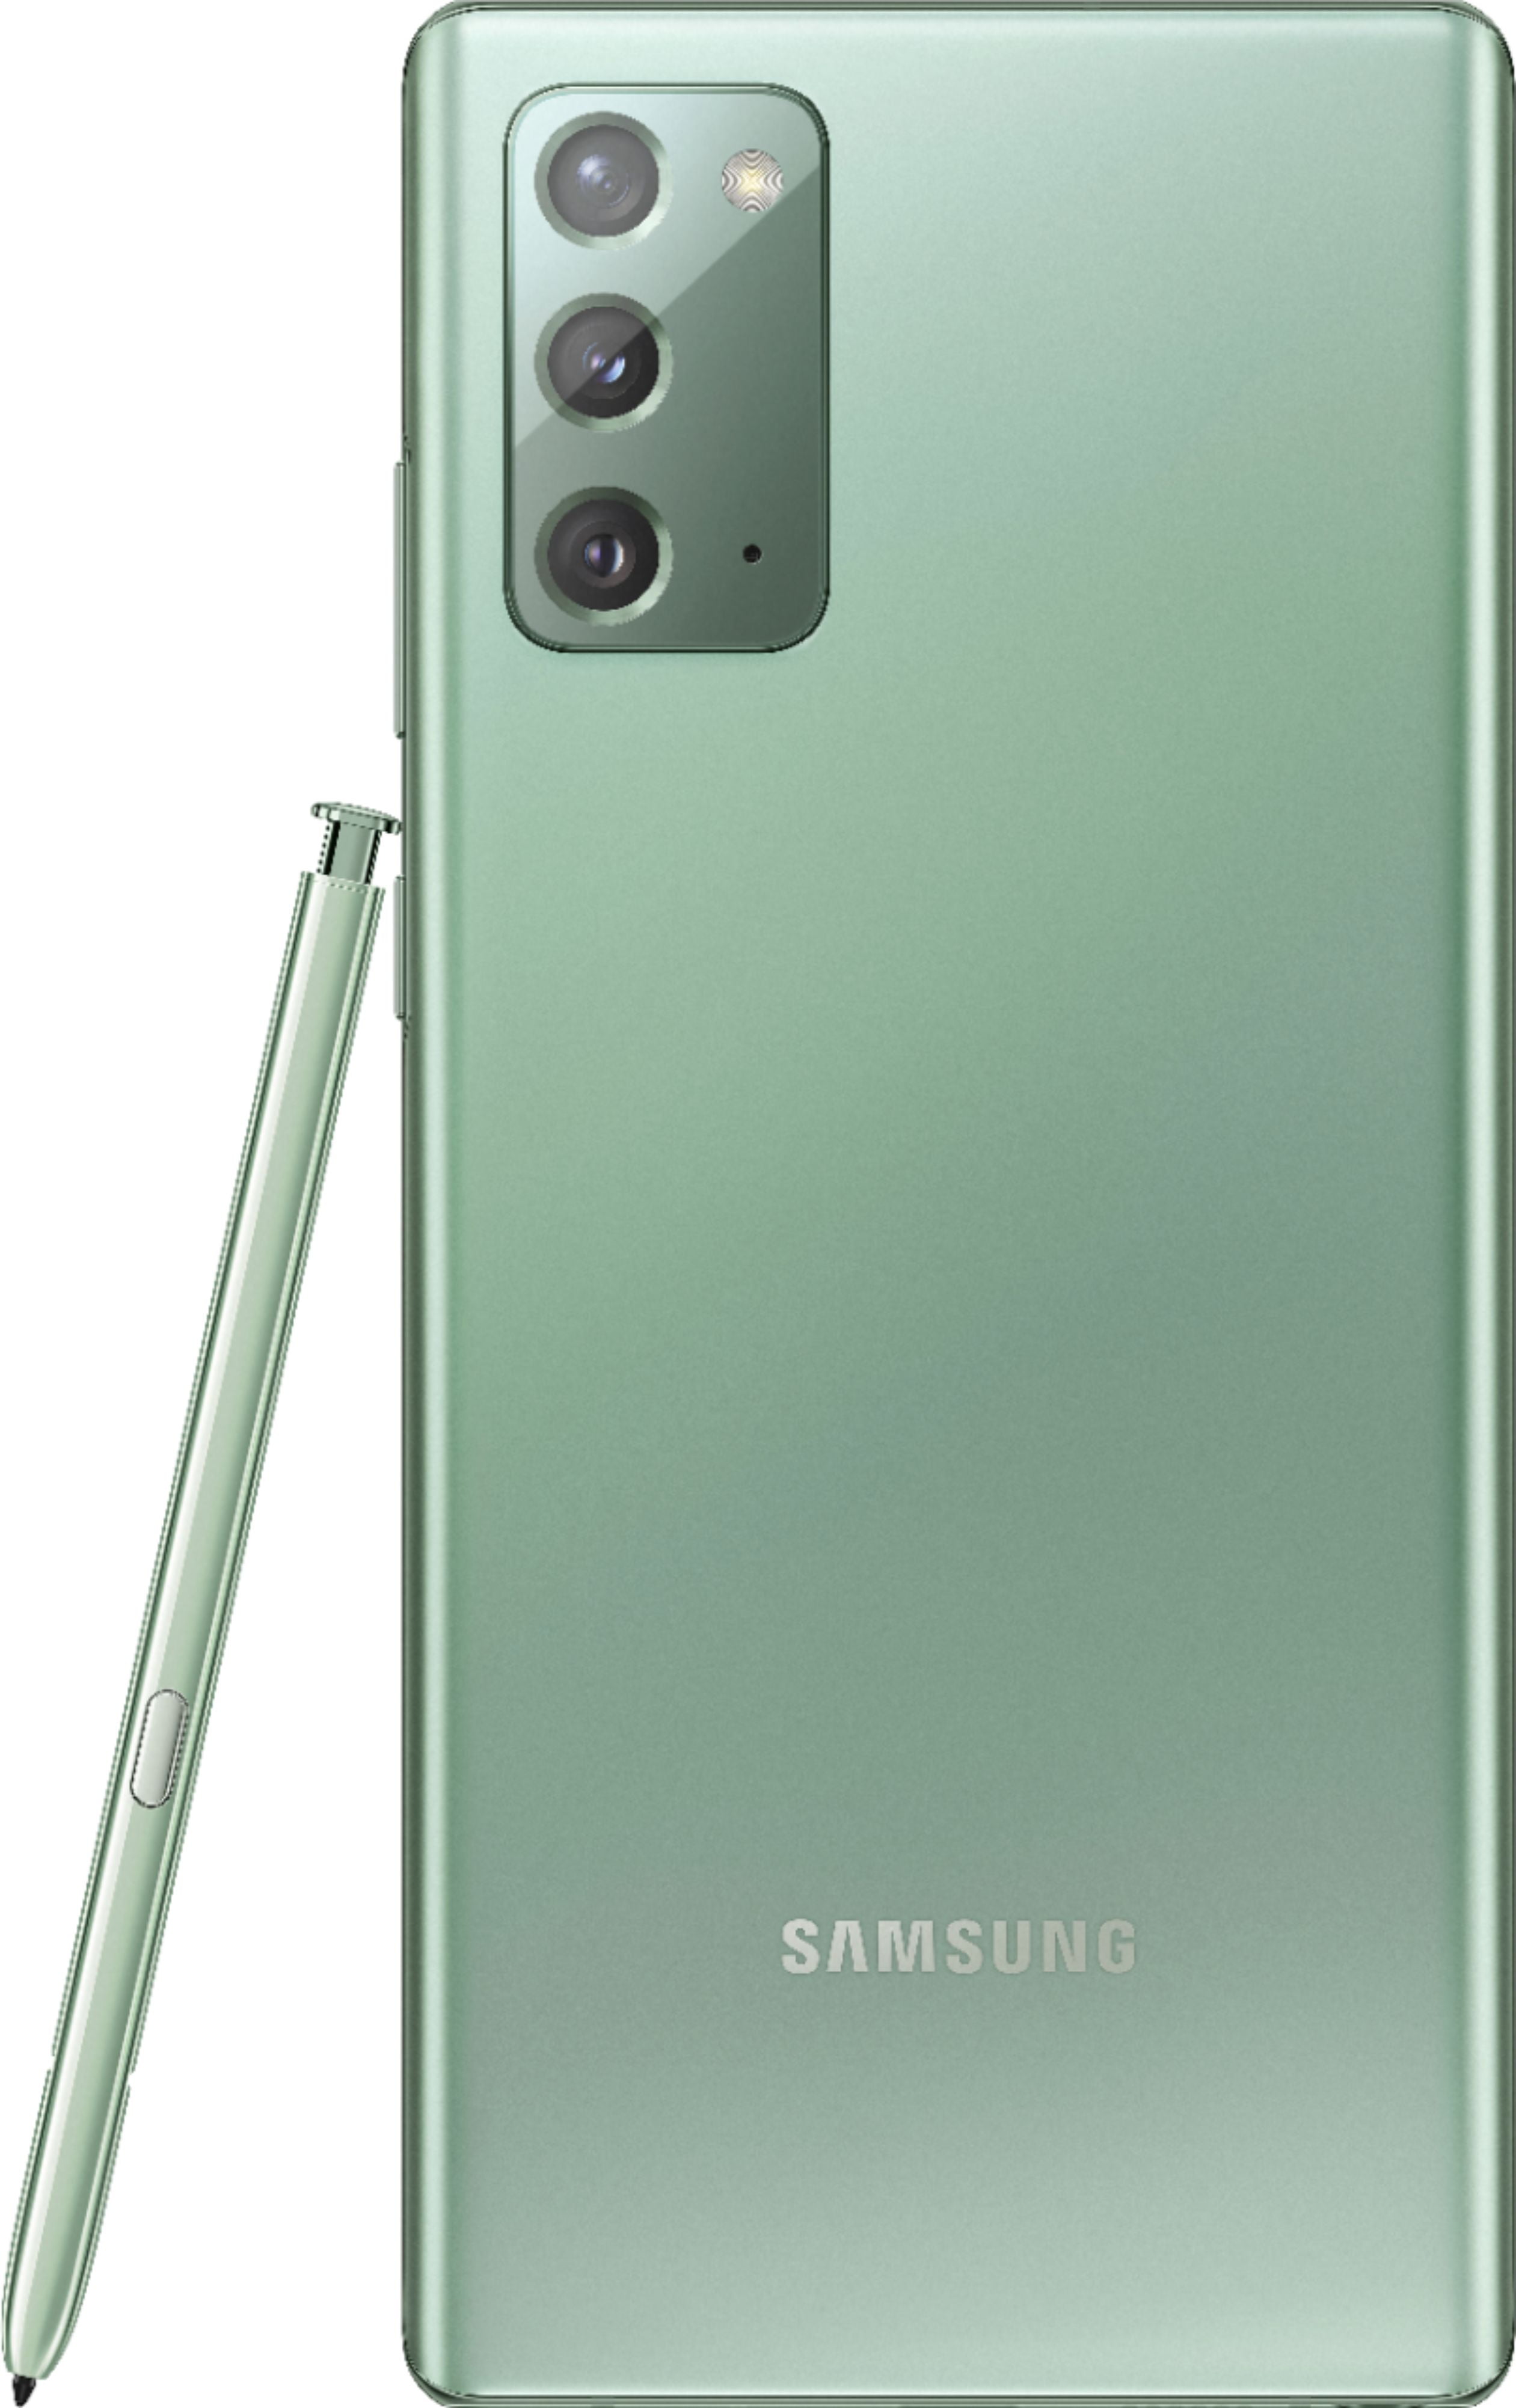 Samsung Galaxy Note 20 Ultra 128GB Unlocked Android Smartphone - Mystic  Black (Renewed)